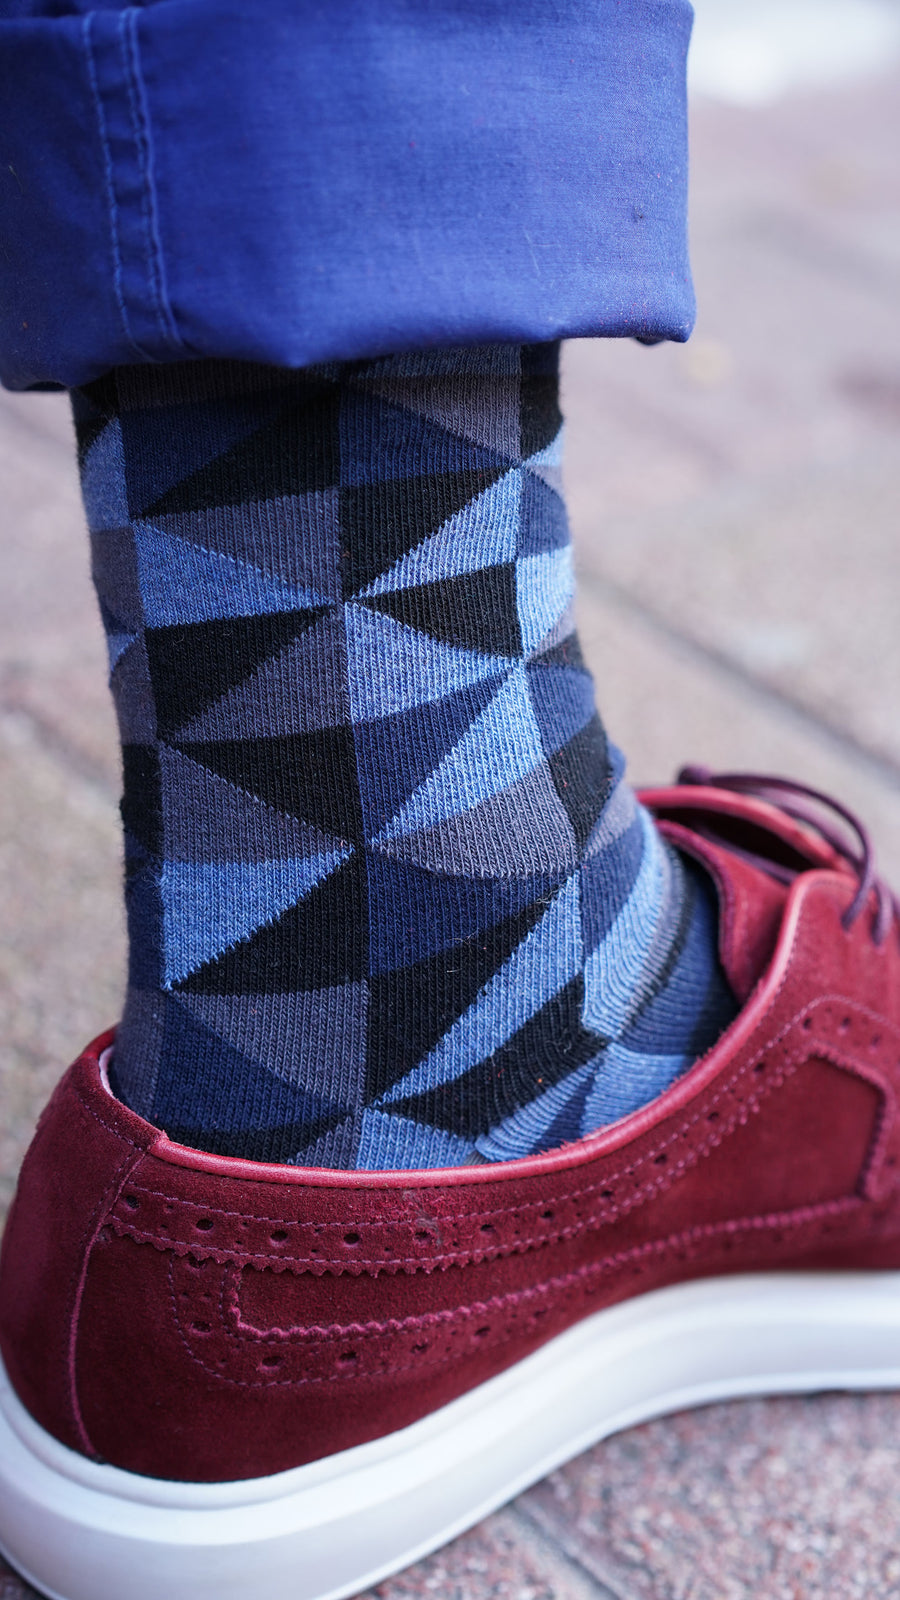 Men's Azure Triangle Socks black and blue